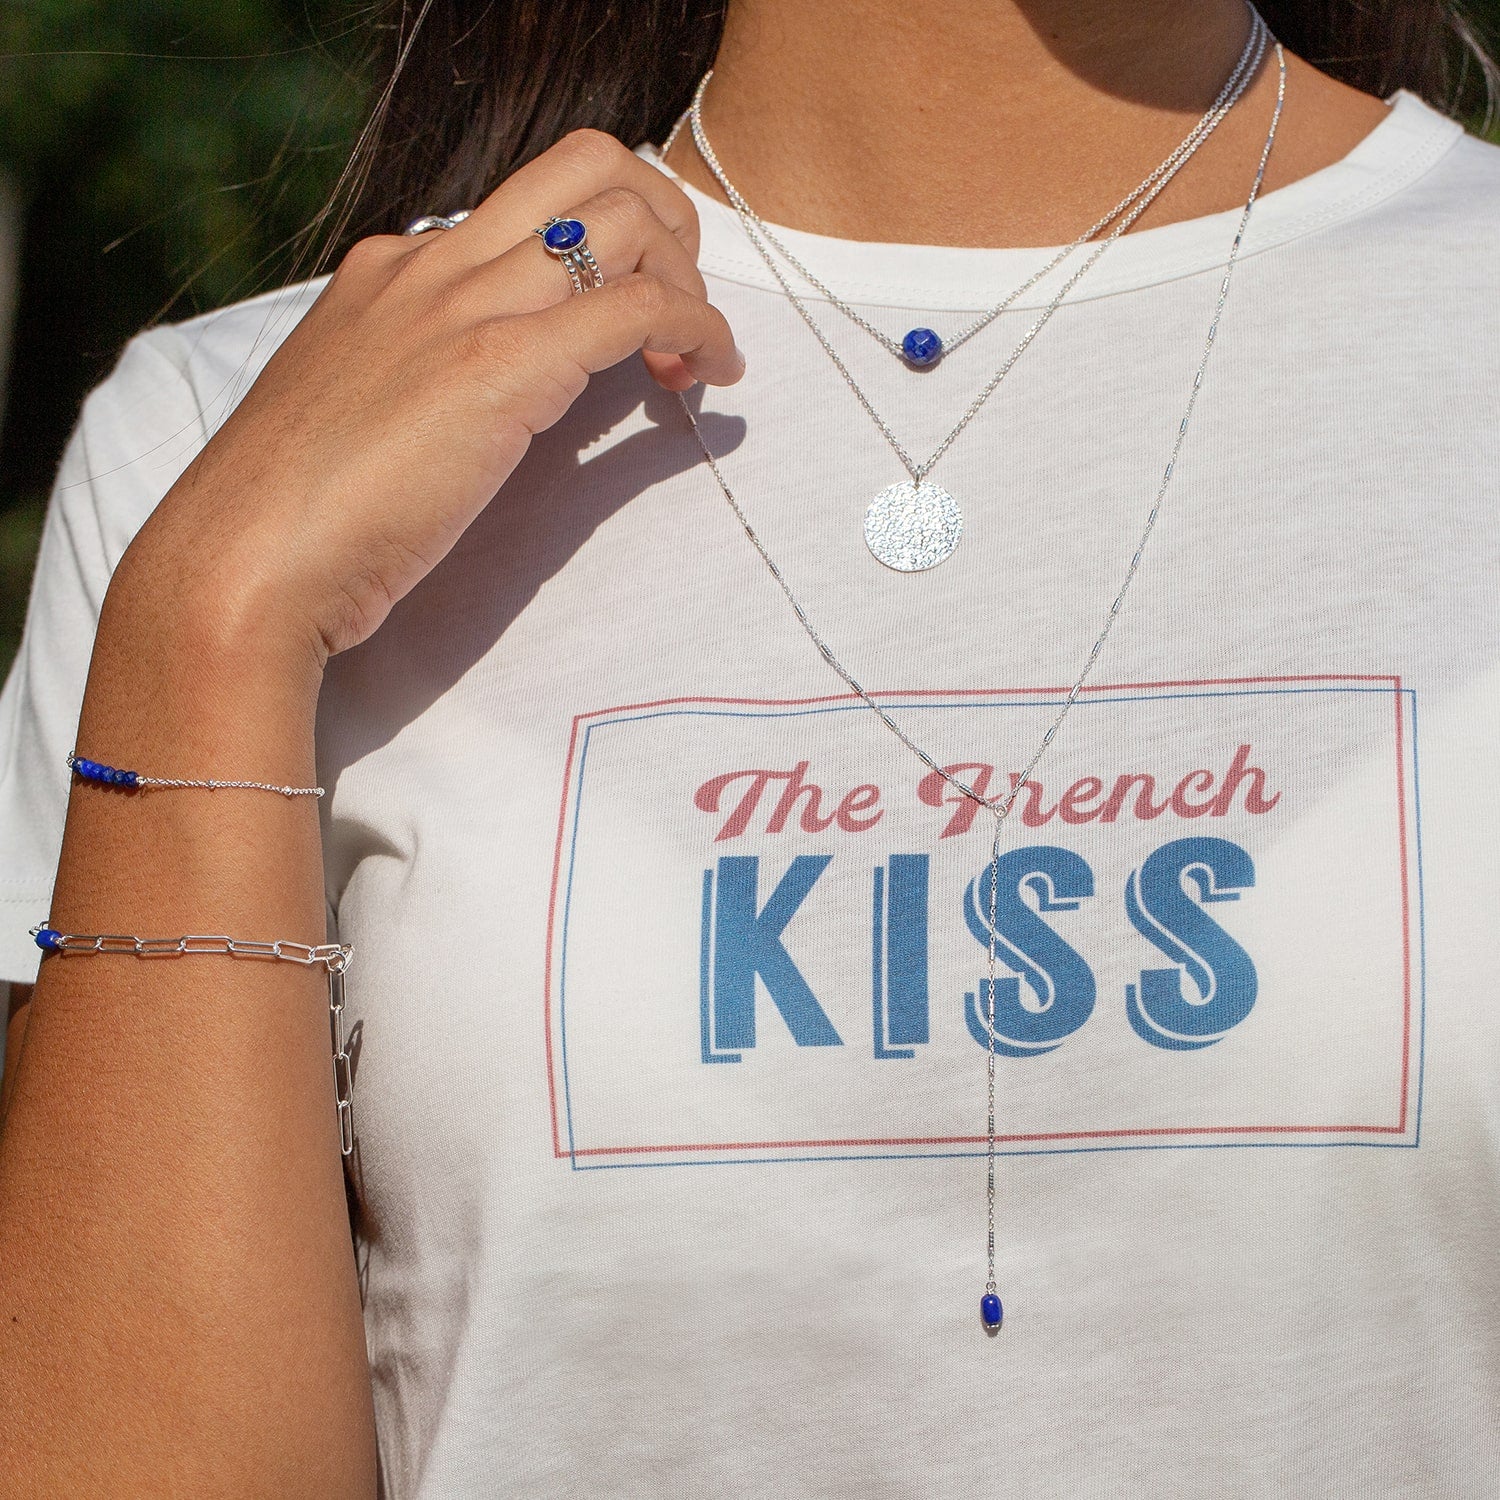 French kiss t-shirt